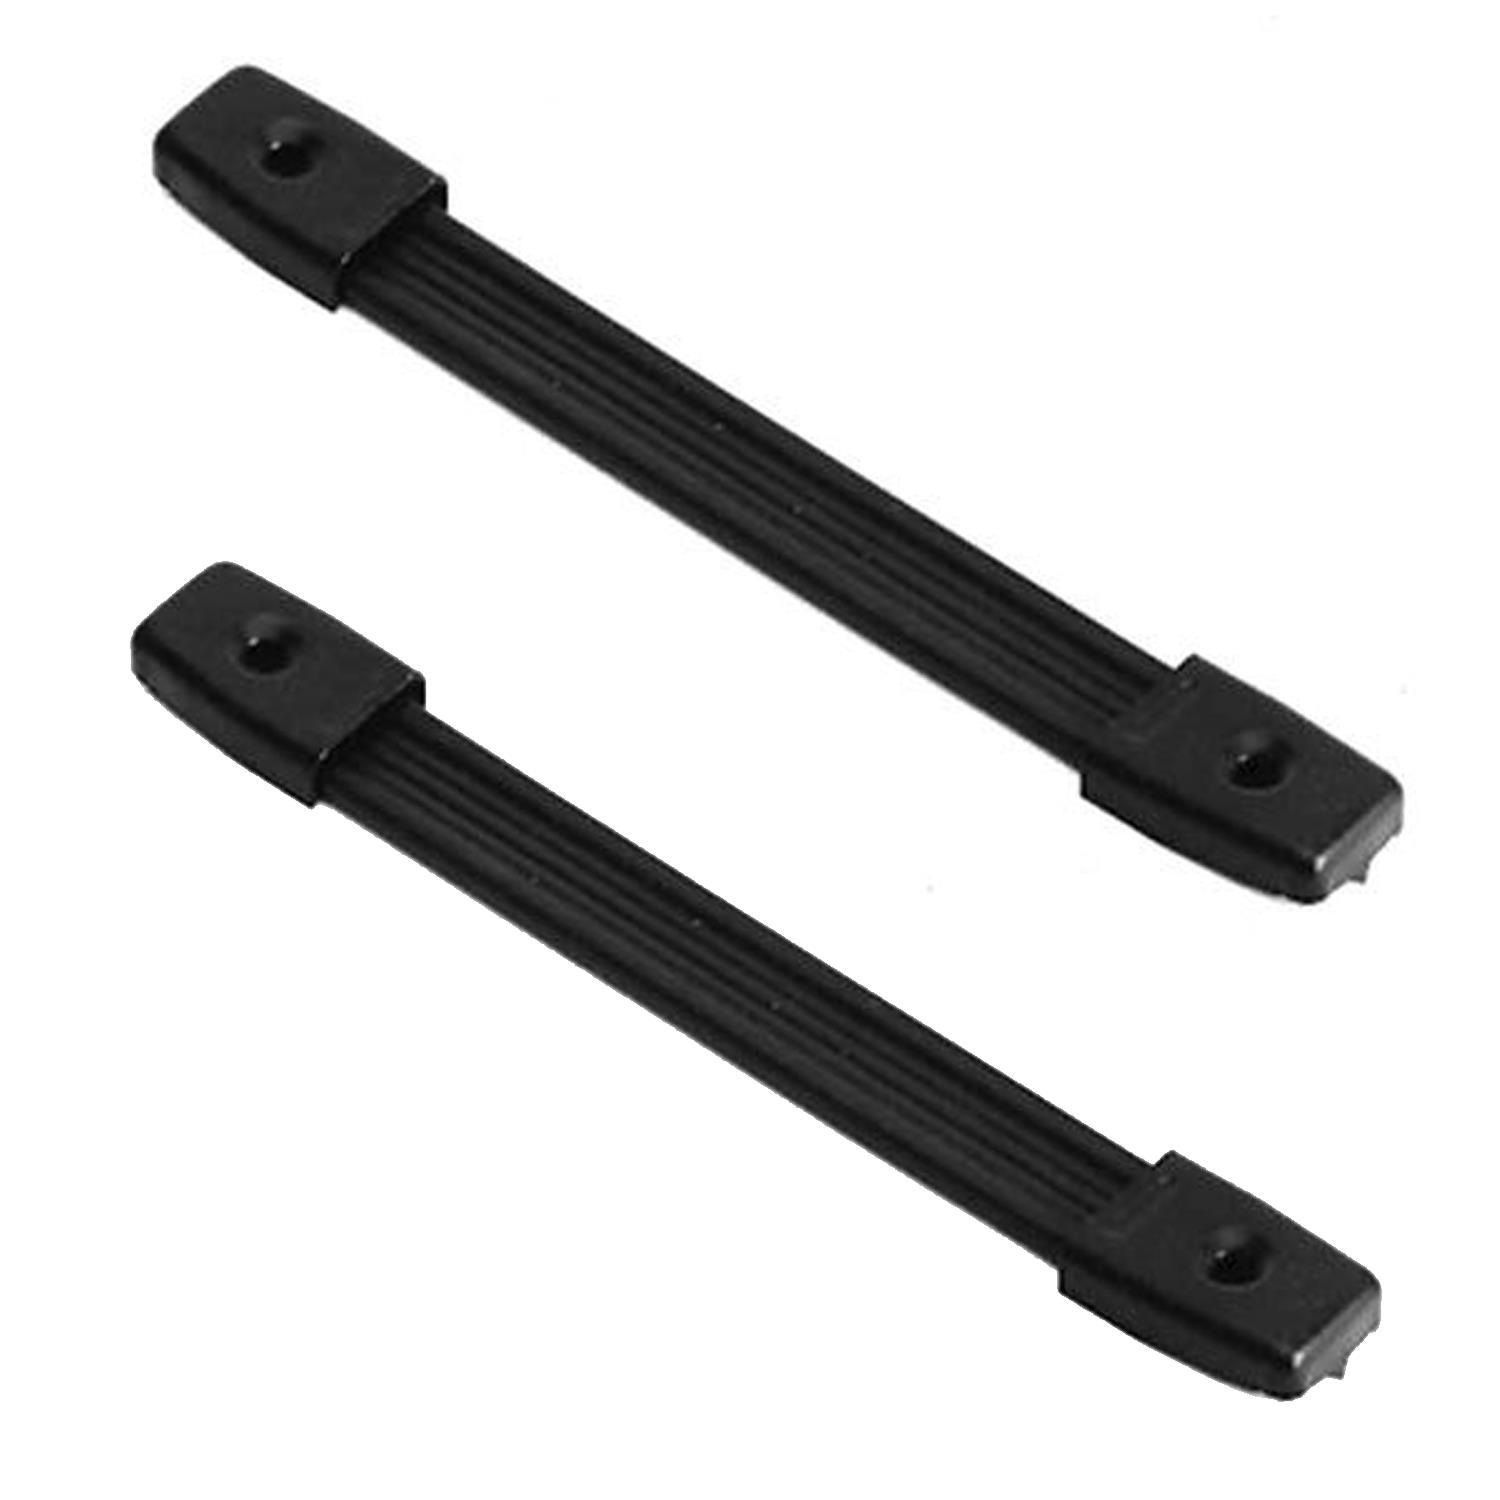 2x Penn Elcom Black Plastic Strap Handle with Black Steel End Caps - DY Pro Audio